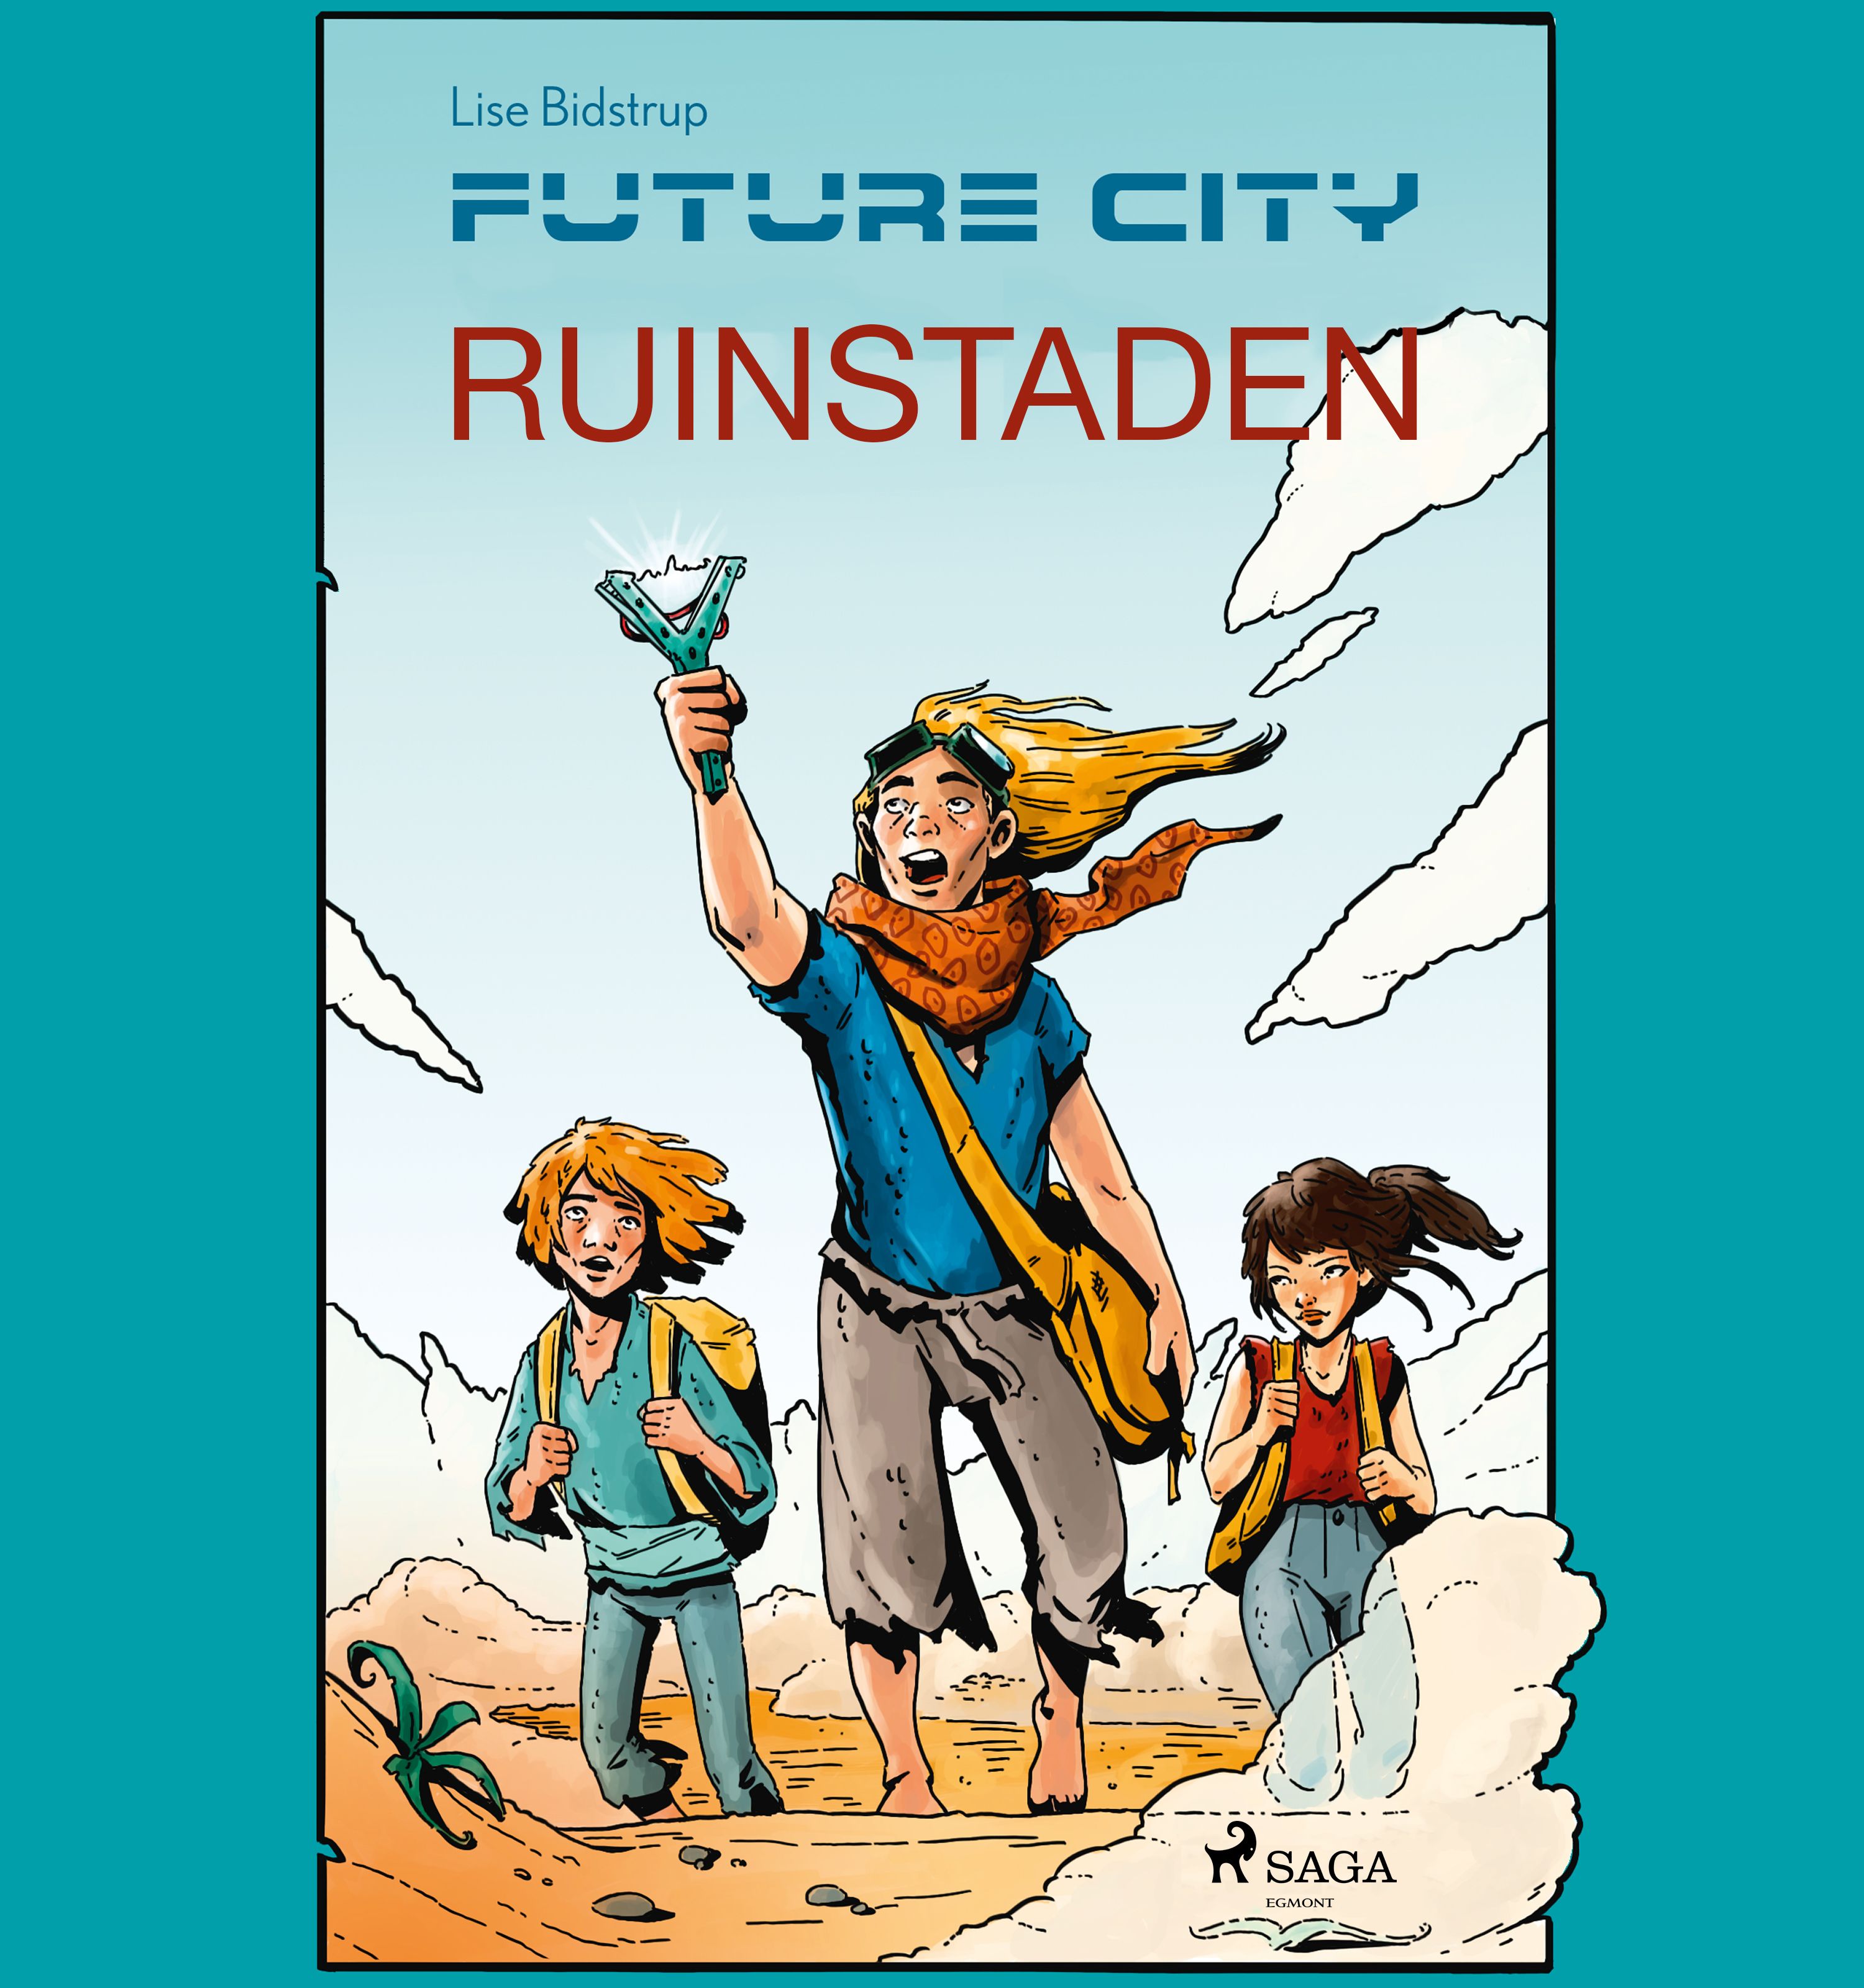 Future city 1: Ruinstaden, audiobook by Lise Bidstrup